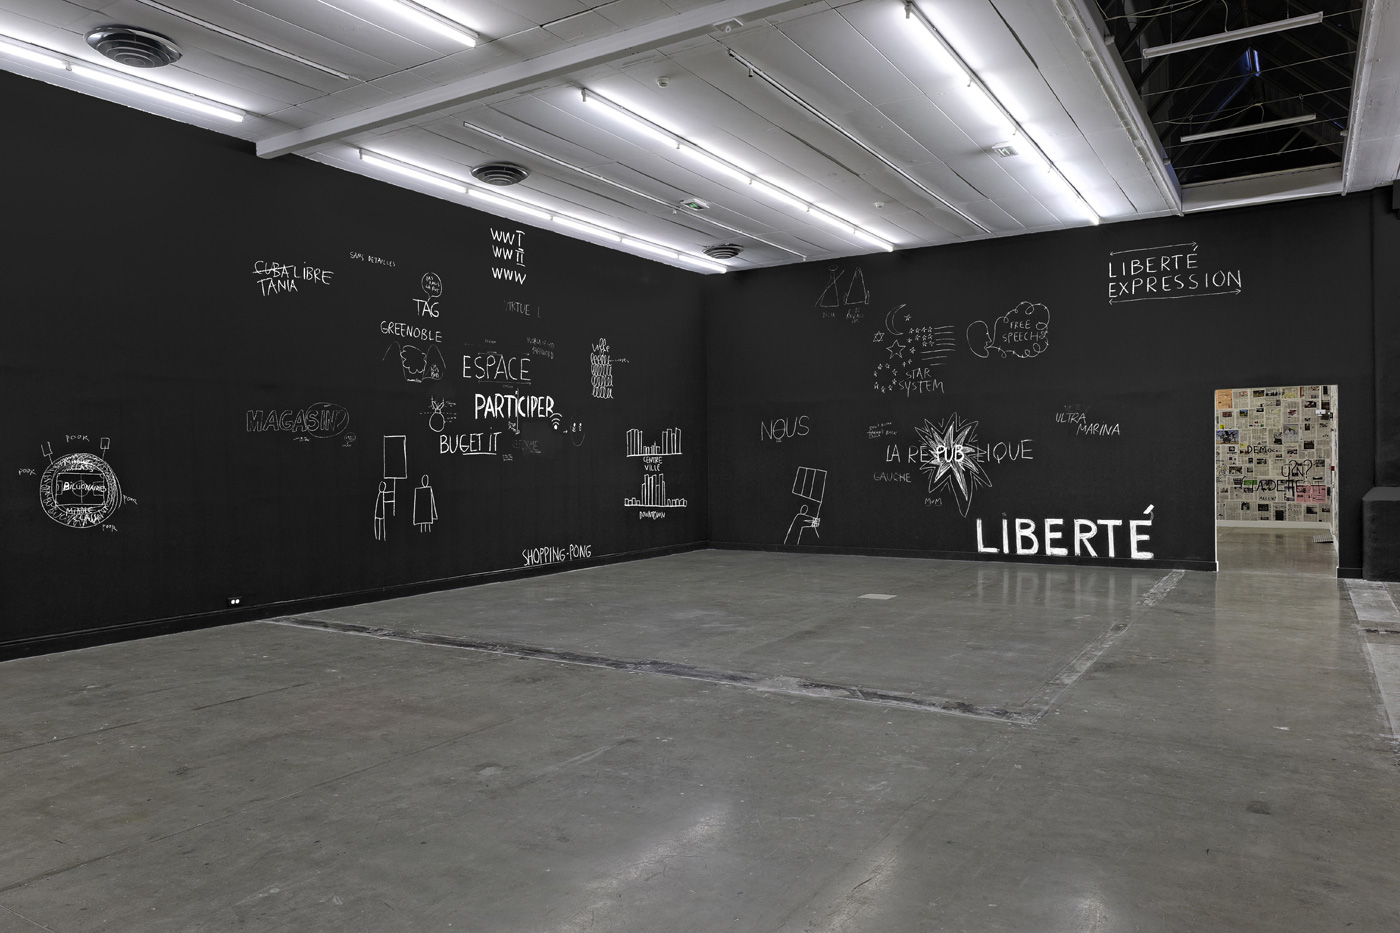 Magasin - Centre National d'Art Contemporain, Grenoble, France, 2015 